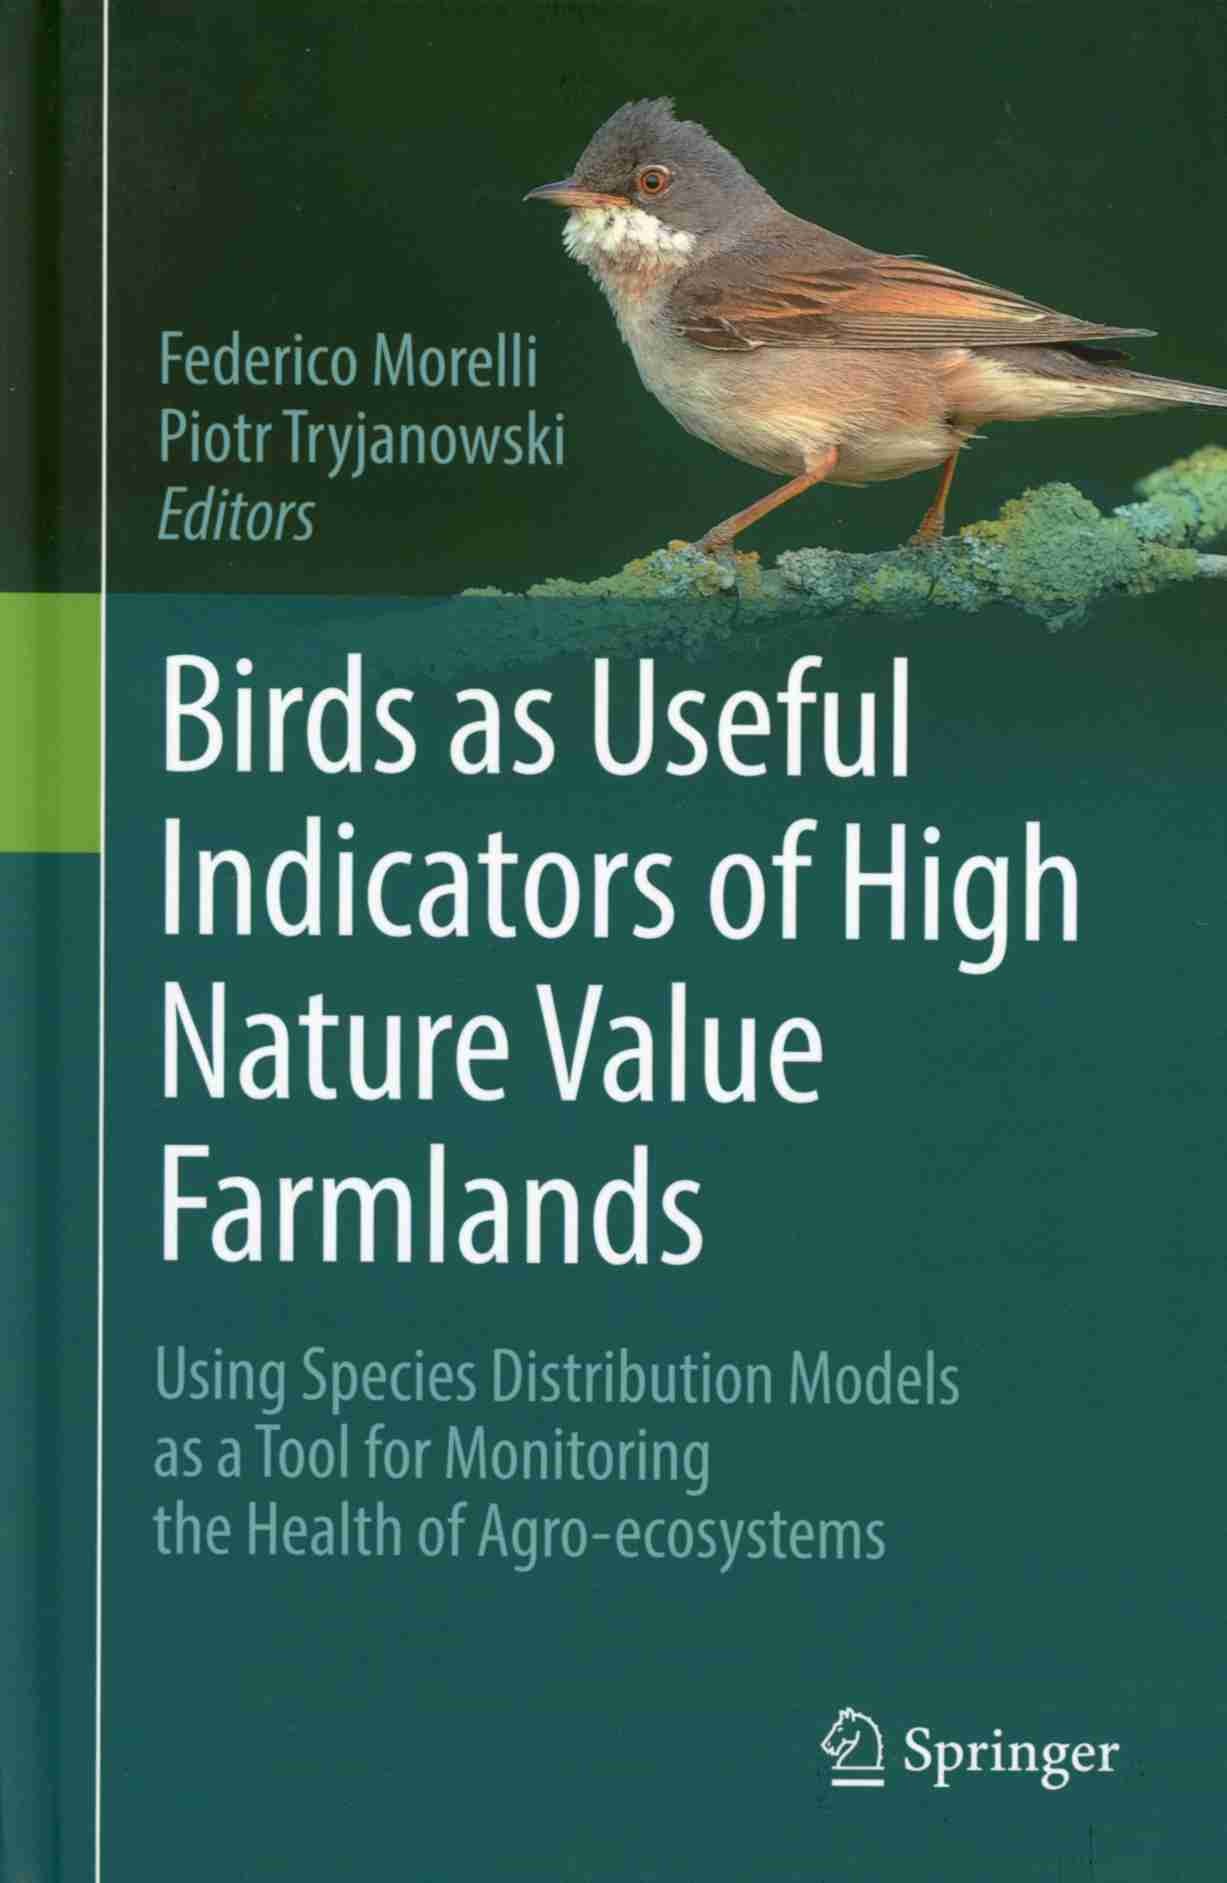 Birds as Useful Indicators of High Nature Value Farmlands, 331